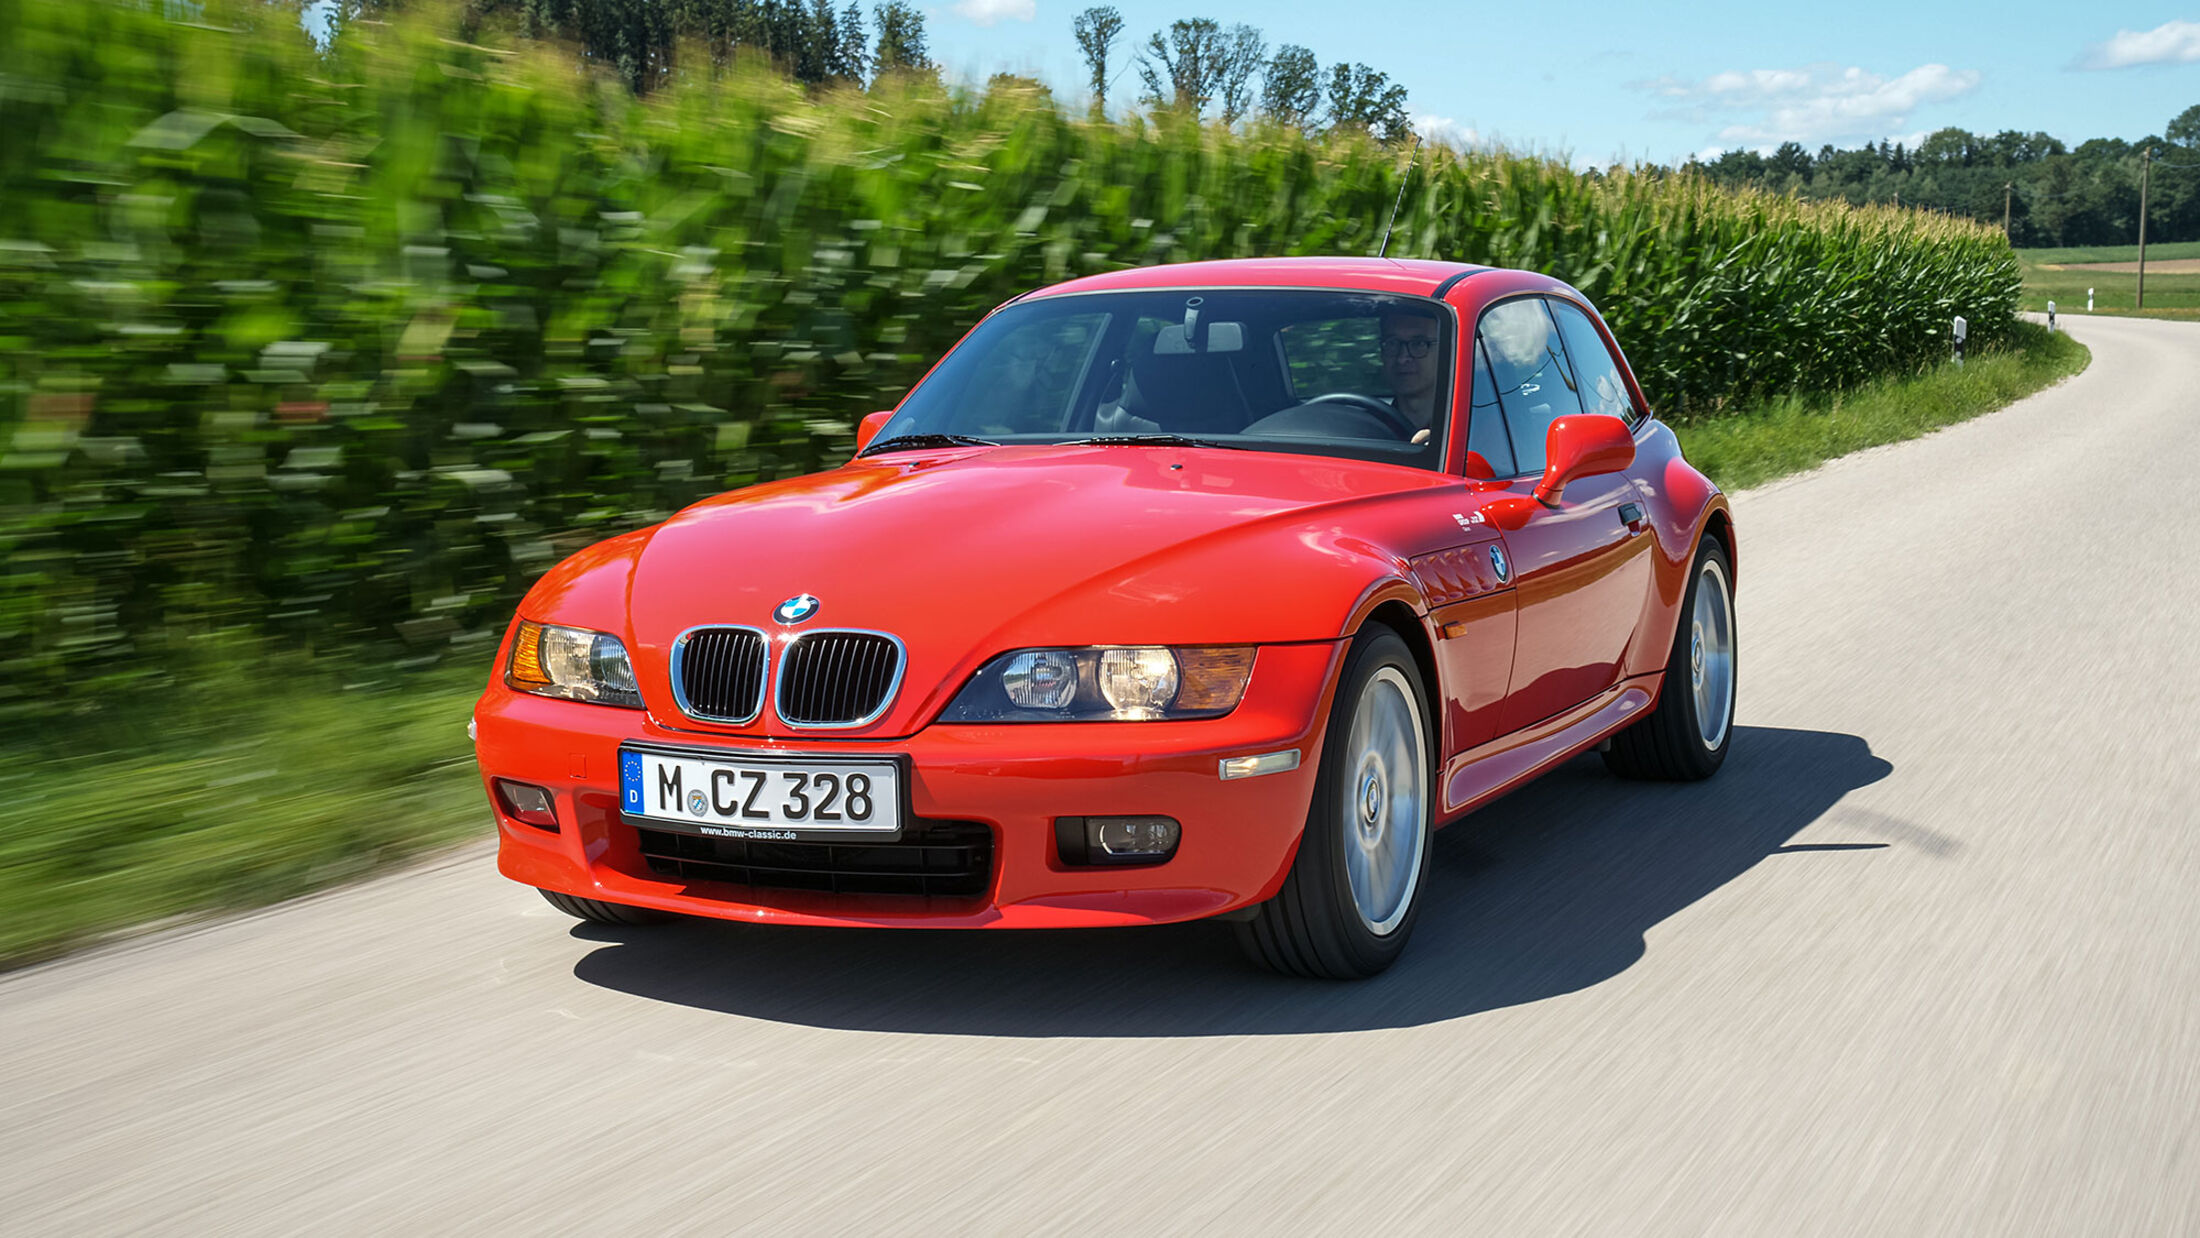 https://imgr1.auto-motor-und-sport.de/BMW-Z3-Coup-2-8i-E36-8-Fahraufnahme-von-vorn-jsonLd16x9-e3909f1a-2031847.jpg